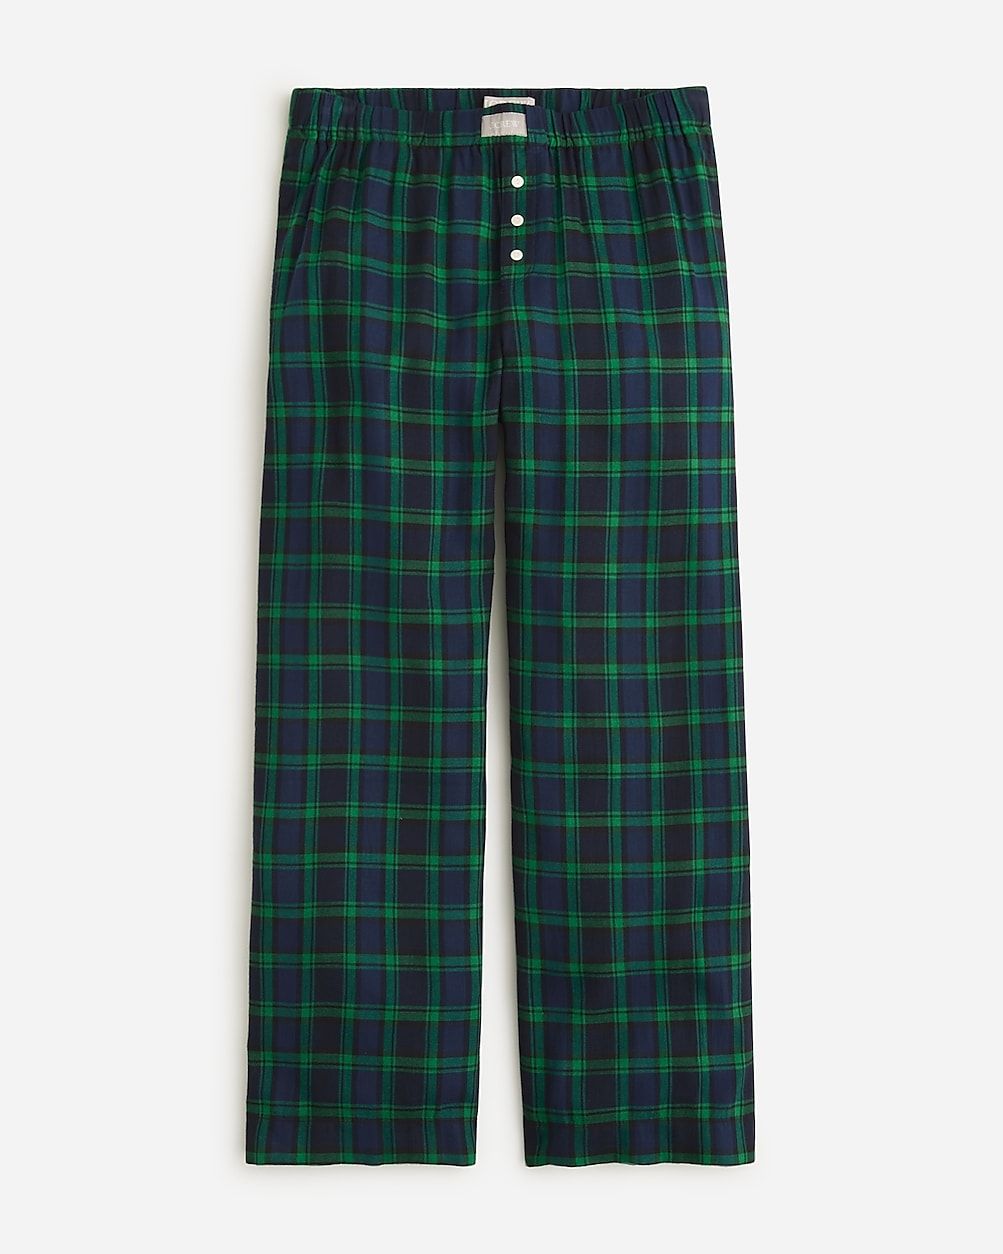 Flannel pajama pant in Black Watch tartan | J.Crew US